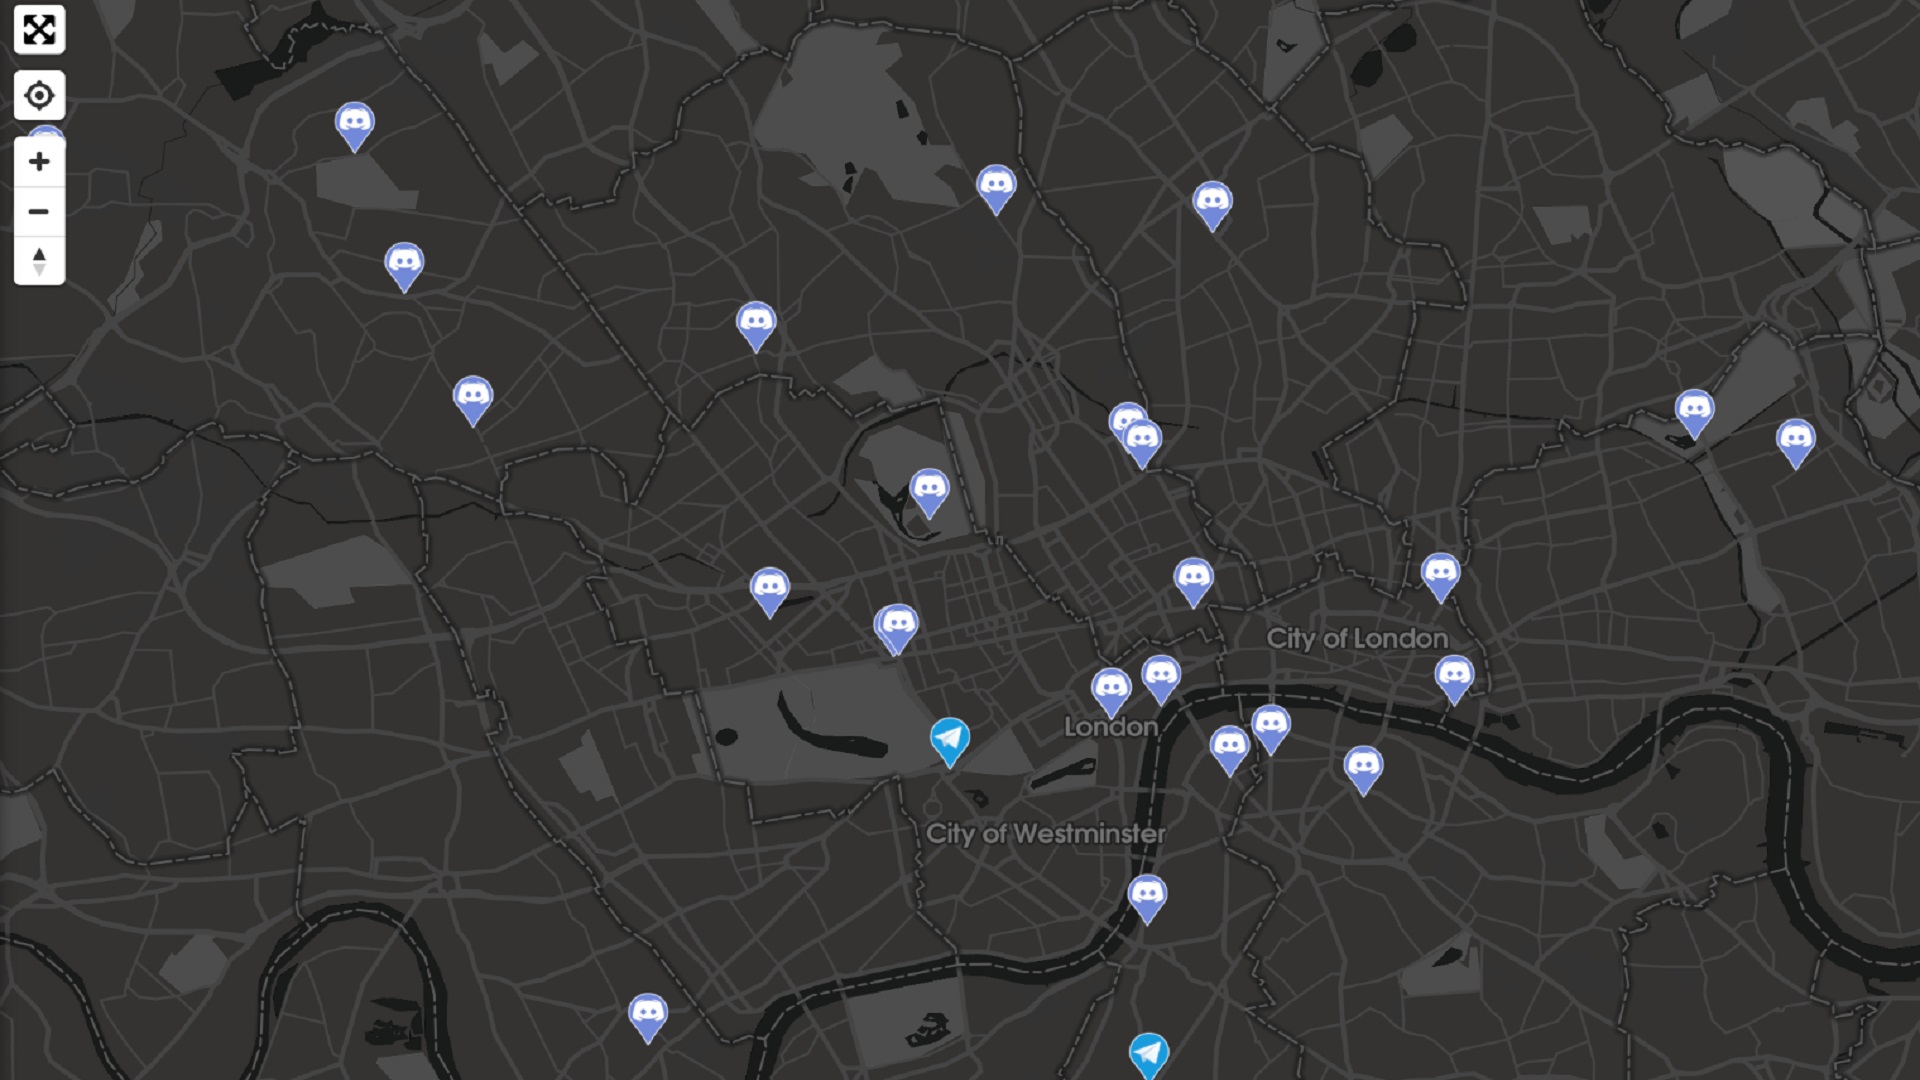 Pokémon Go maps - a London street map in dark mode